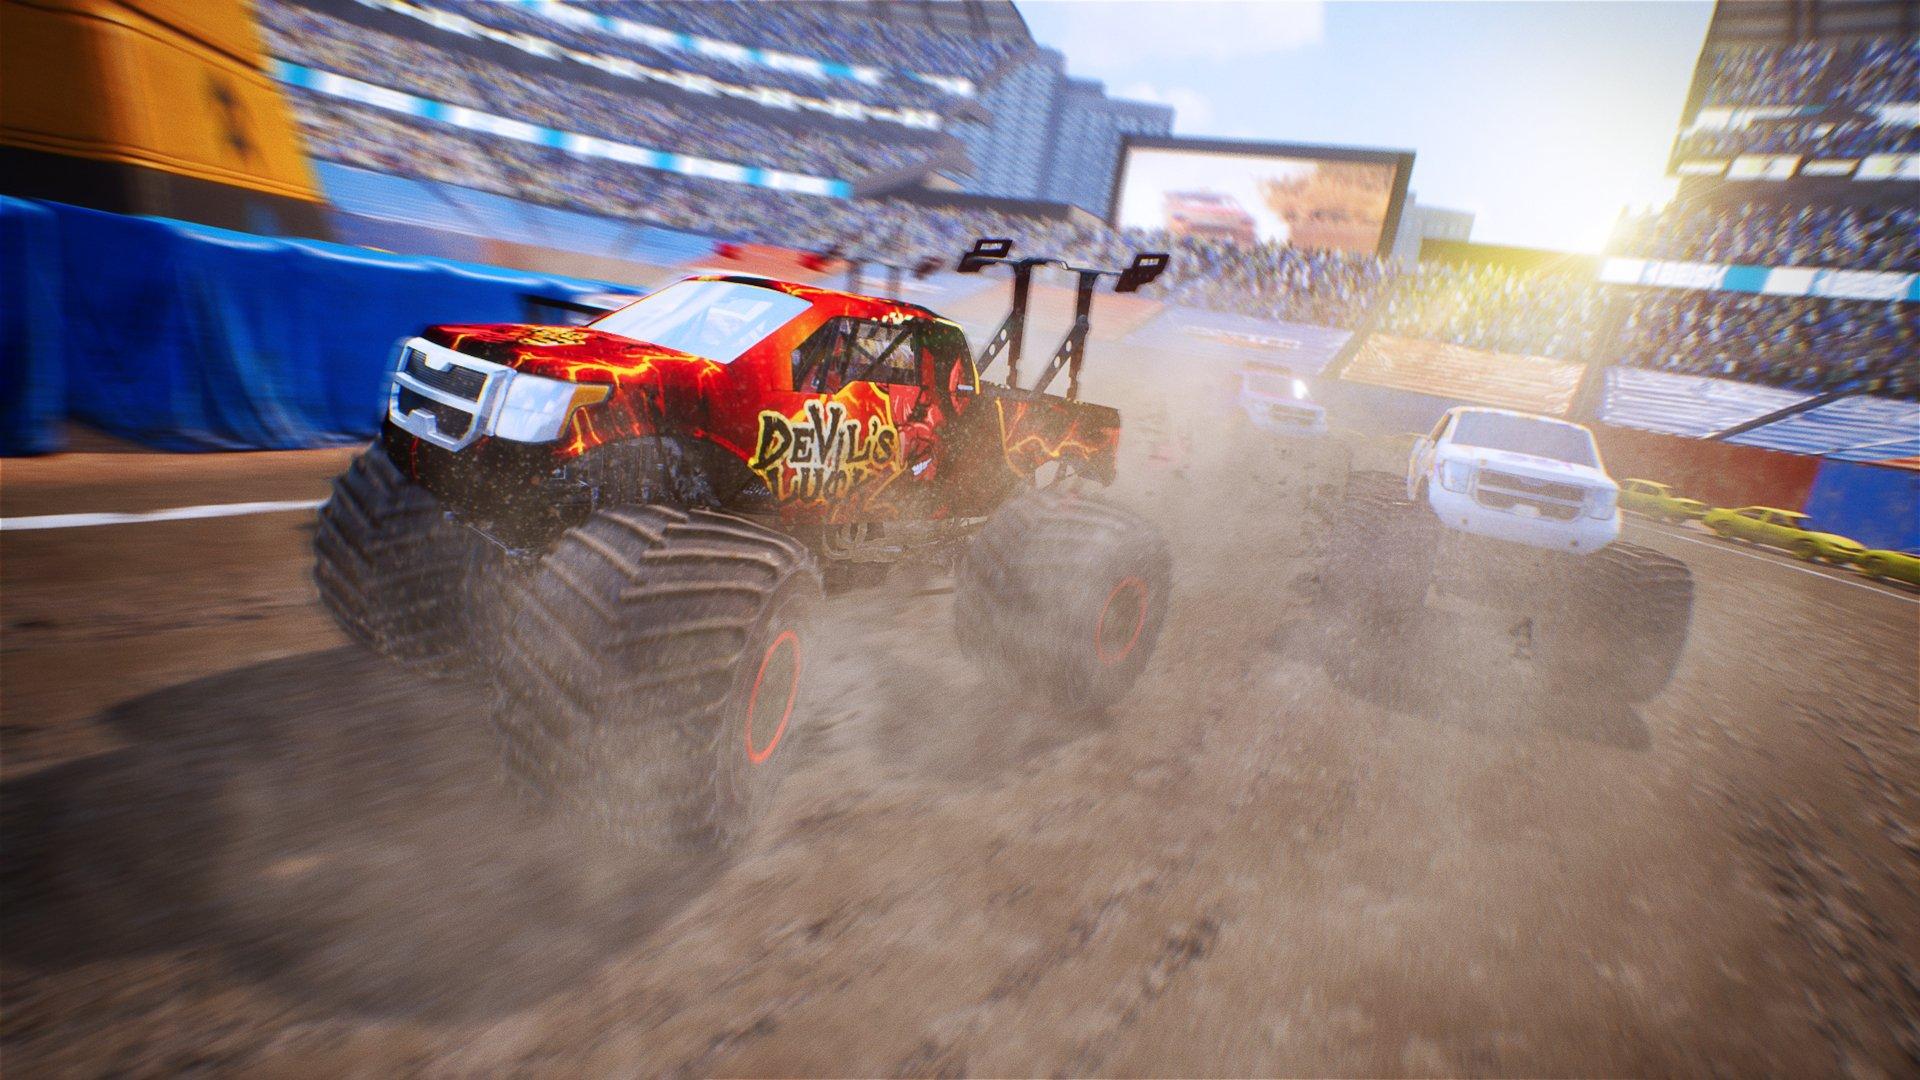 Monster Truck Championship - PS4 - Game Games - Loja de Games Online